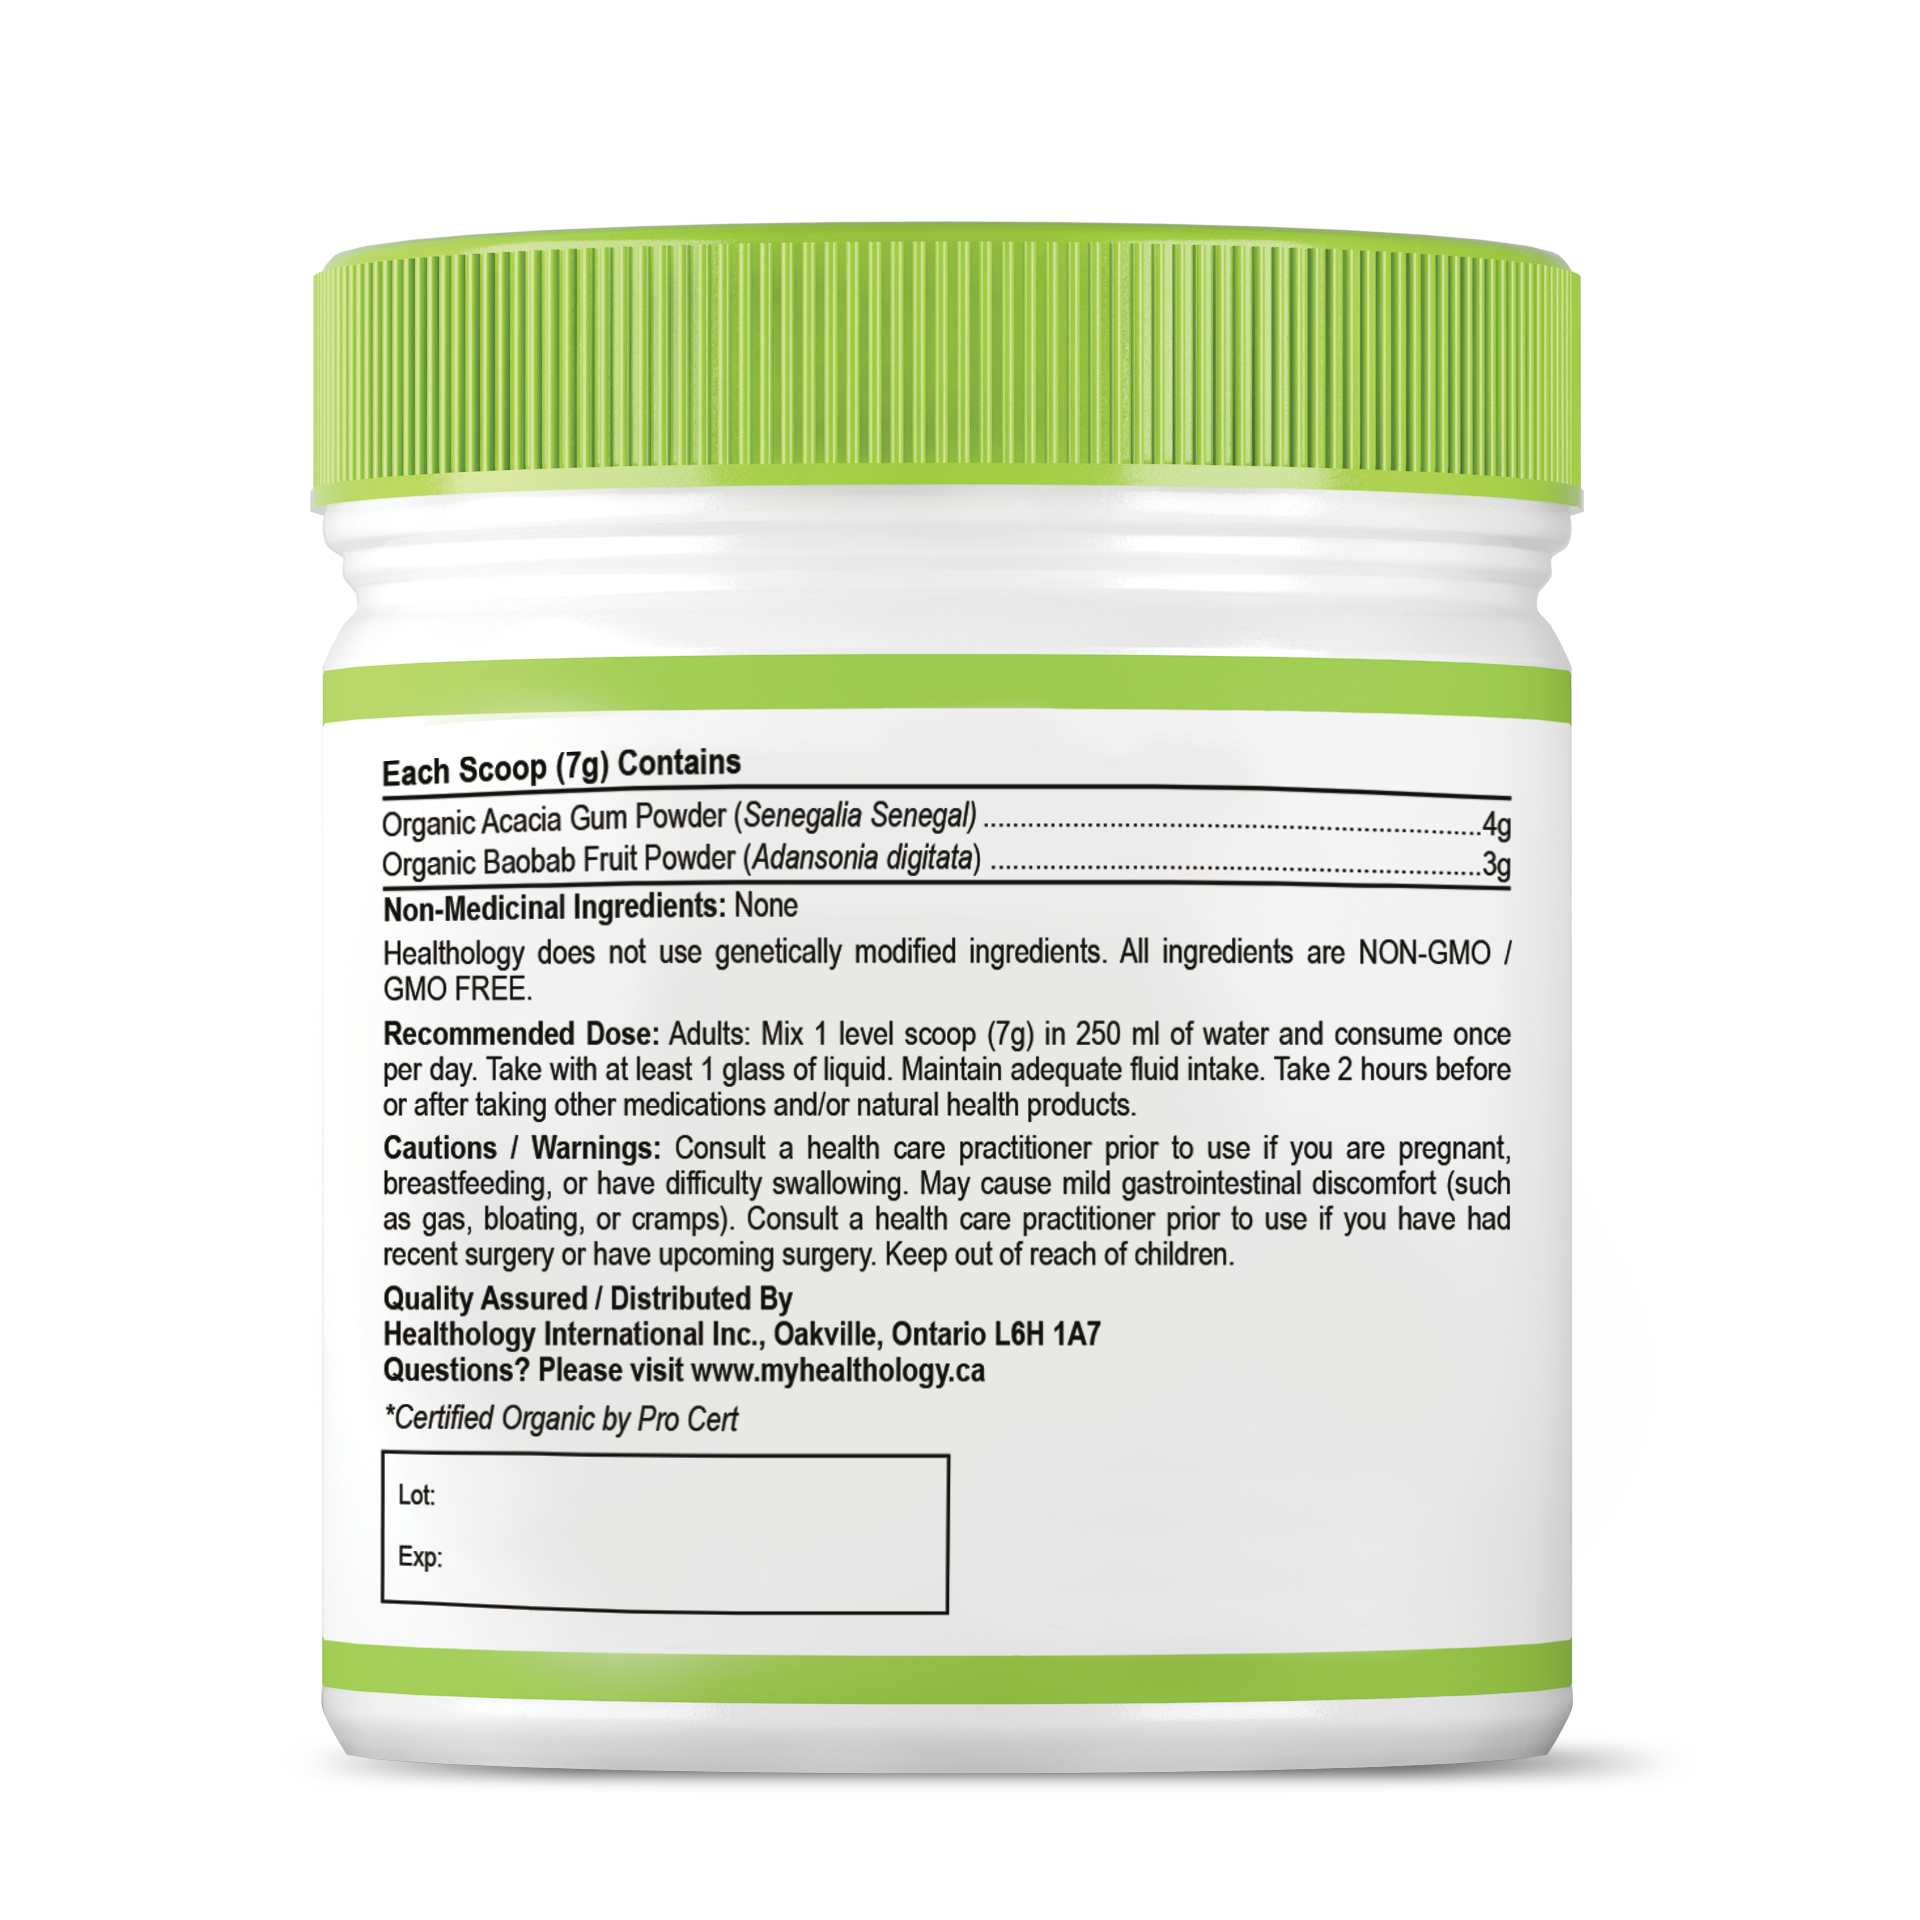 Healthology Soluble Fibre Blend 210 g